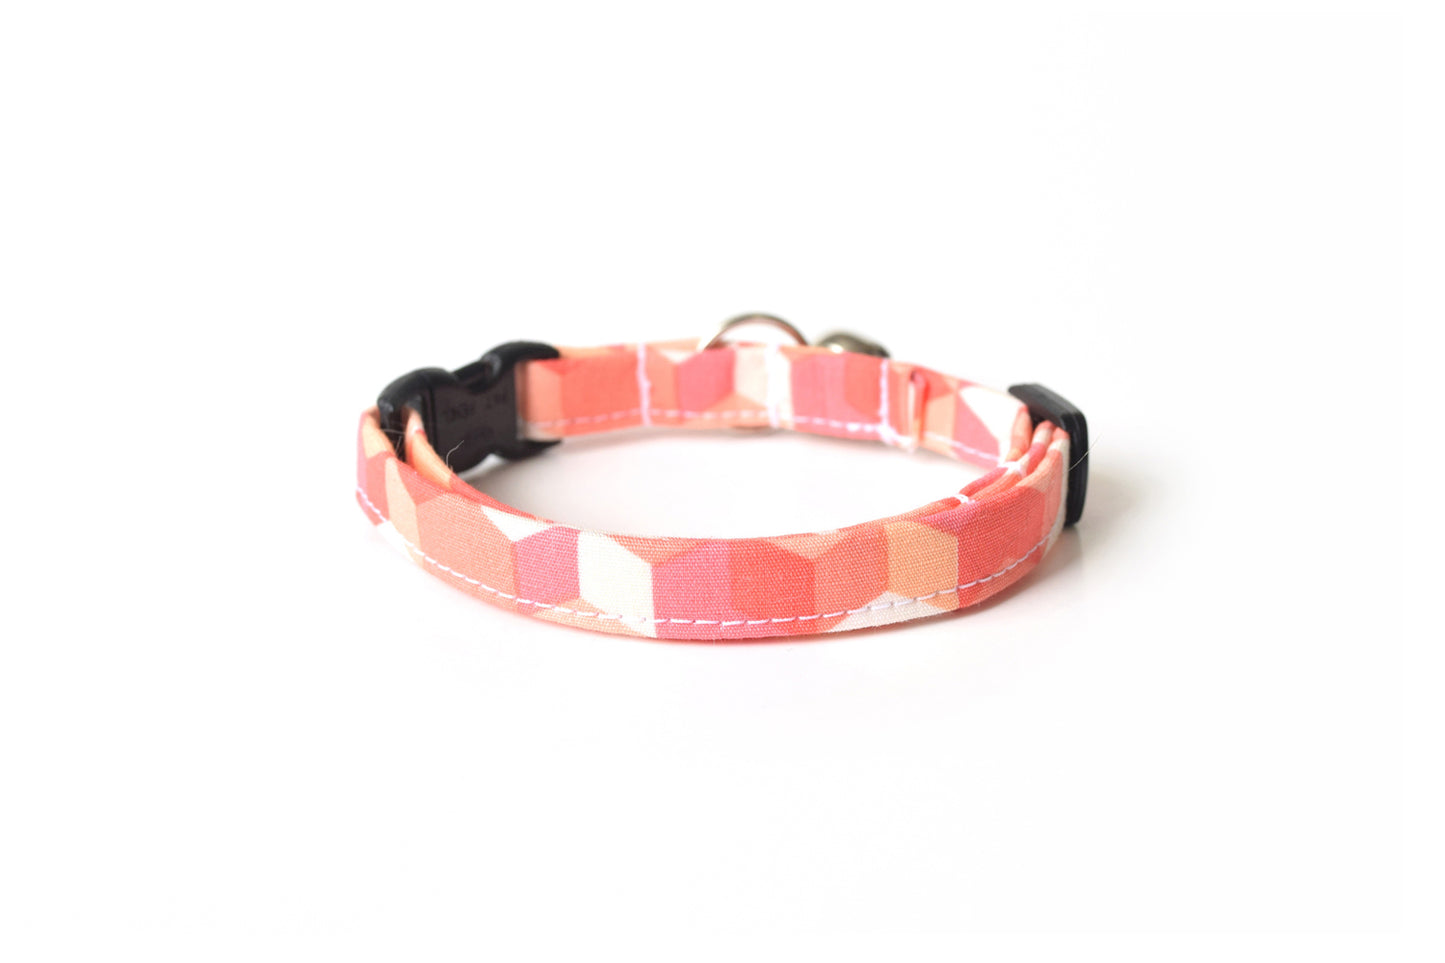 Salmon Pink Cat Collar - Coral Pink Geometric Cubes - Breakaway Cat Collar - Handmade by Kira's Pet Shop